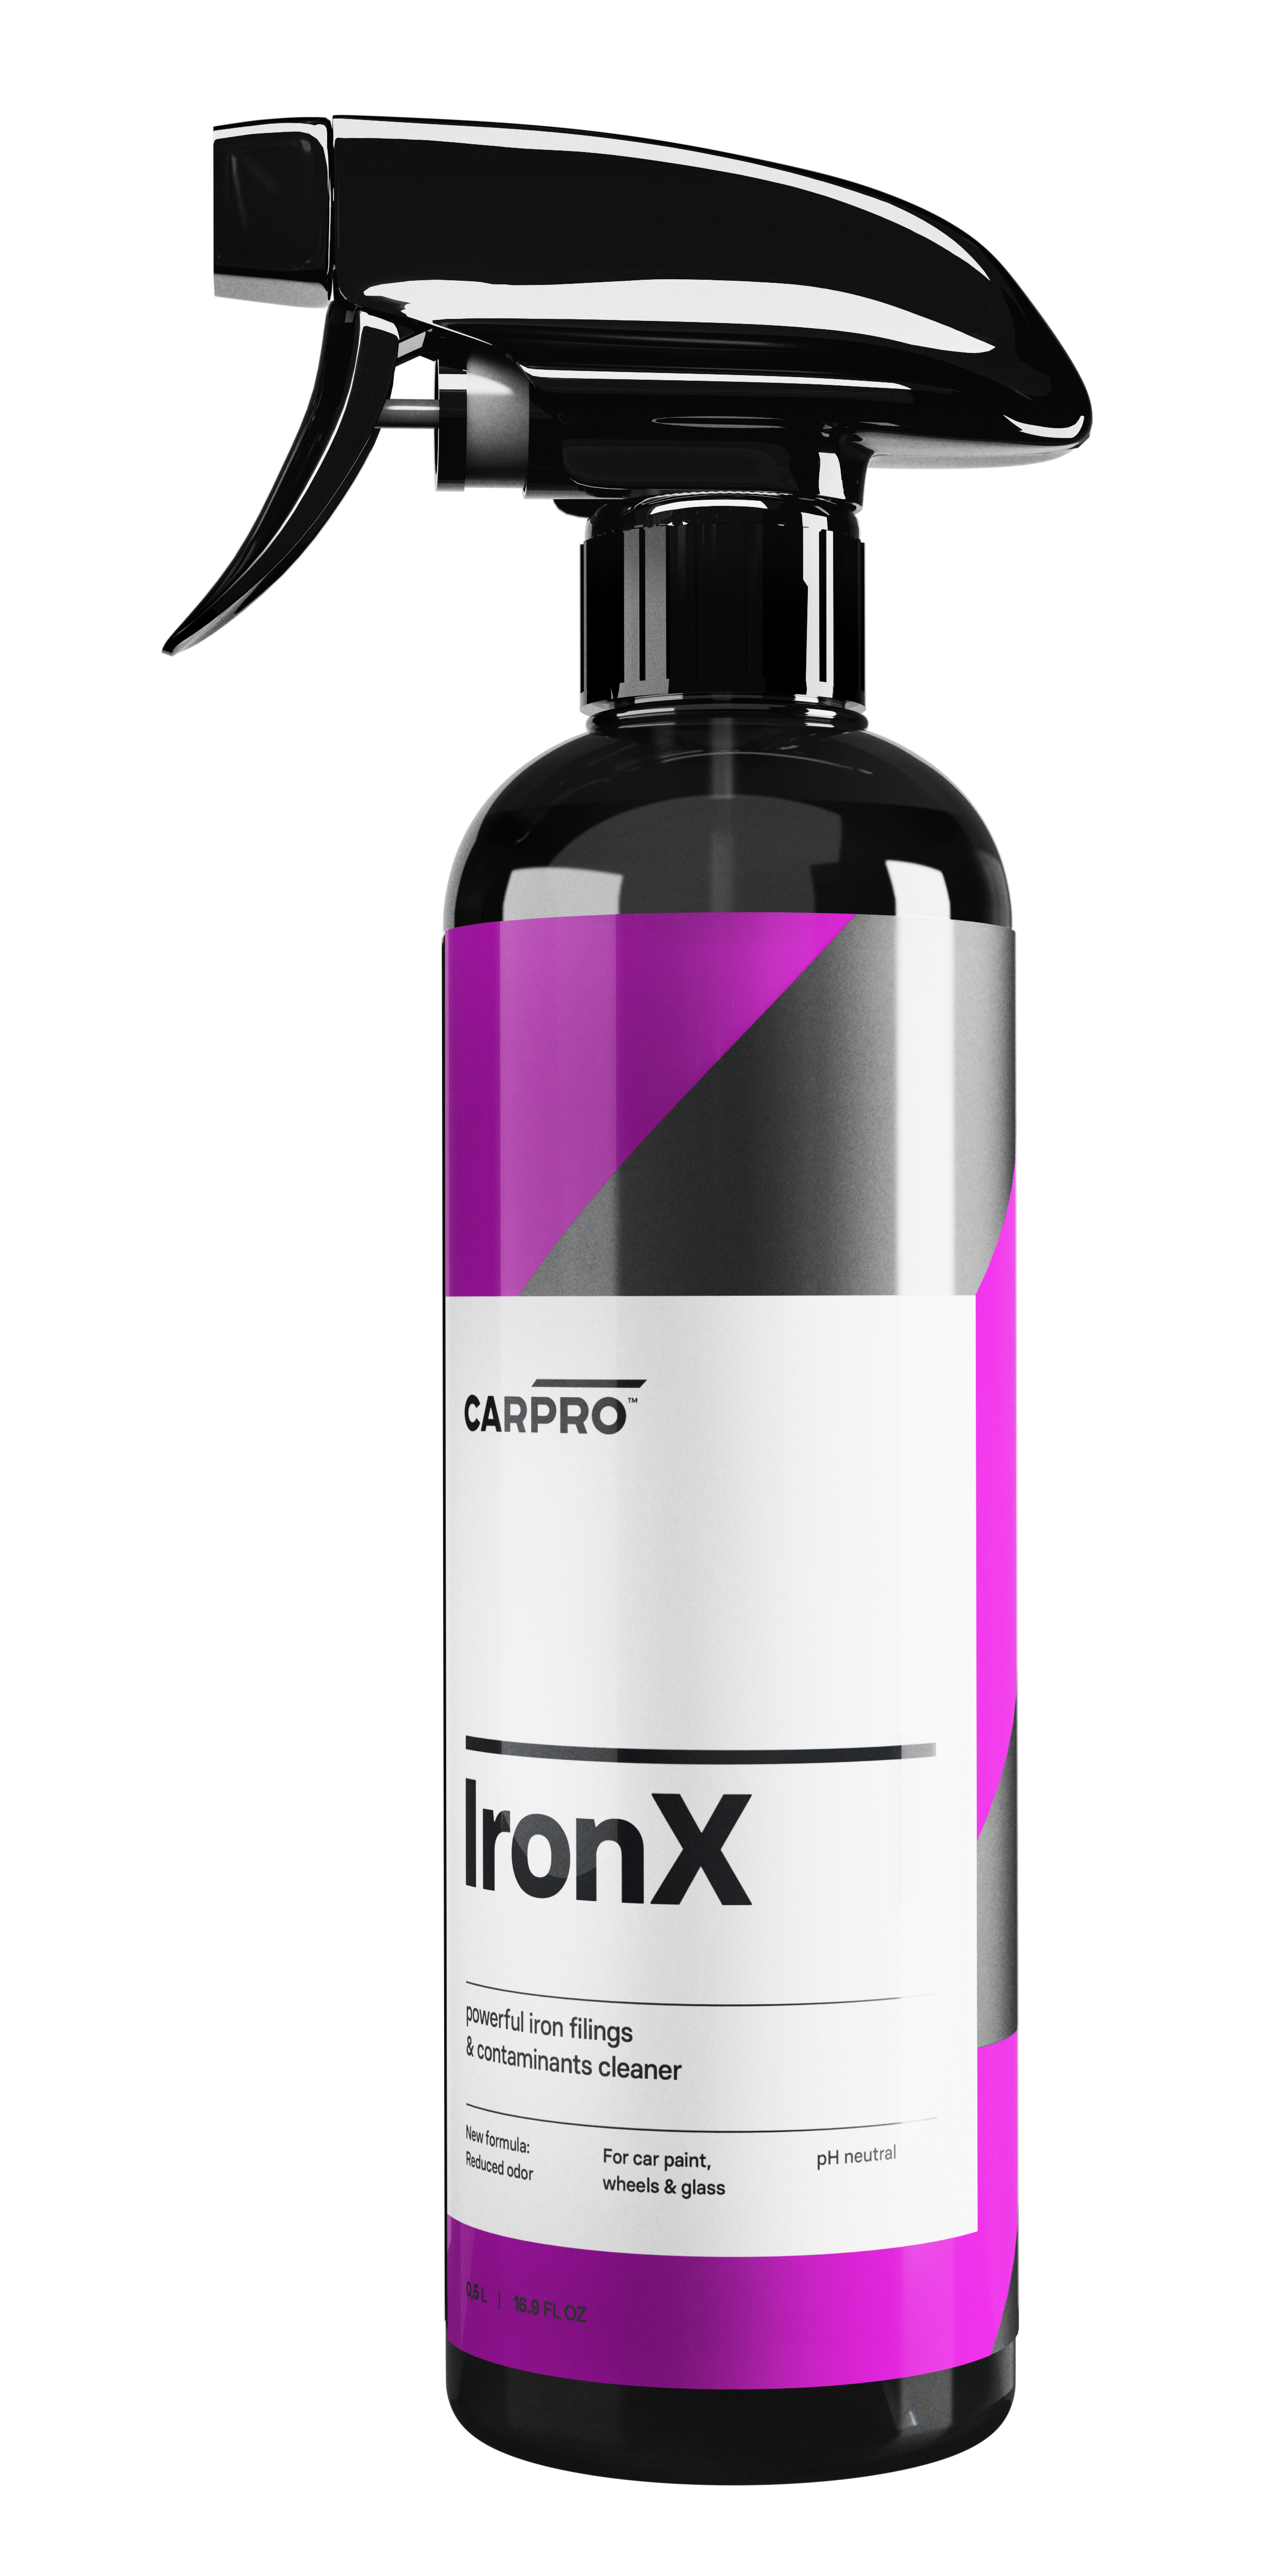 CARPRO IronX 500ml - Iron filings and contaminants cleaner